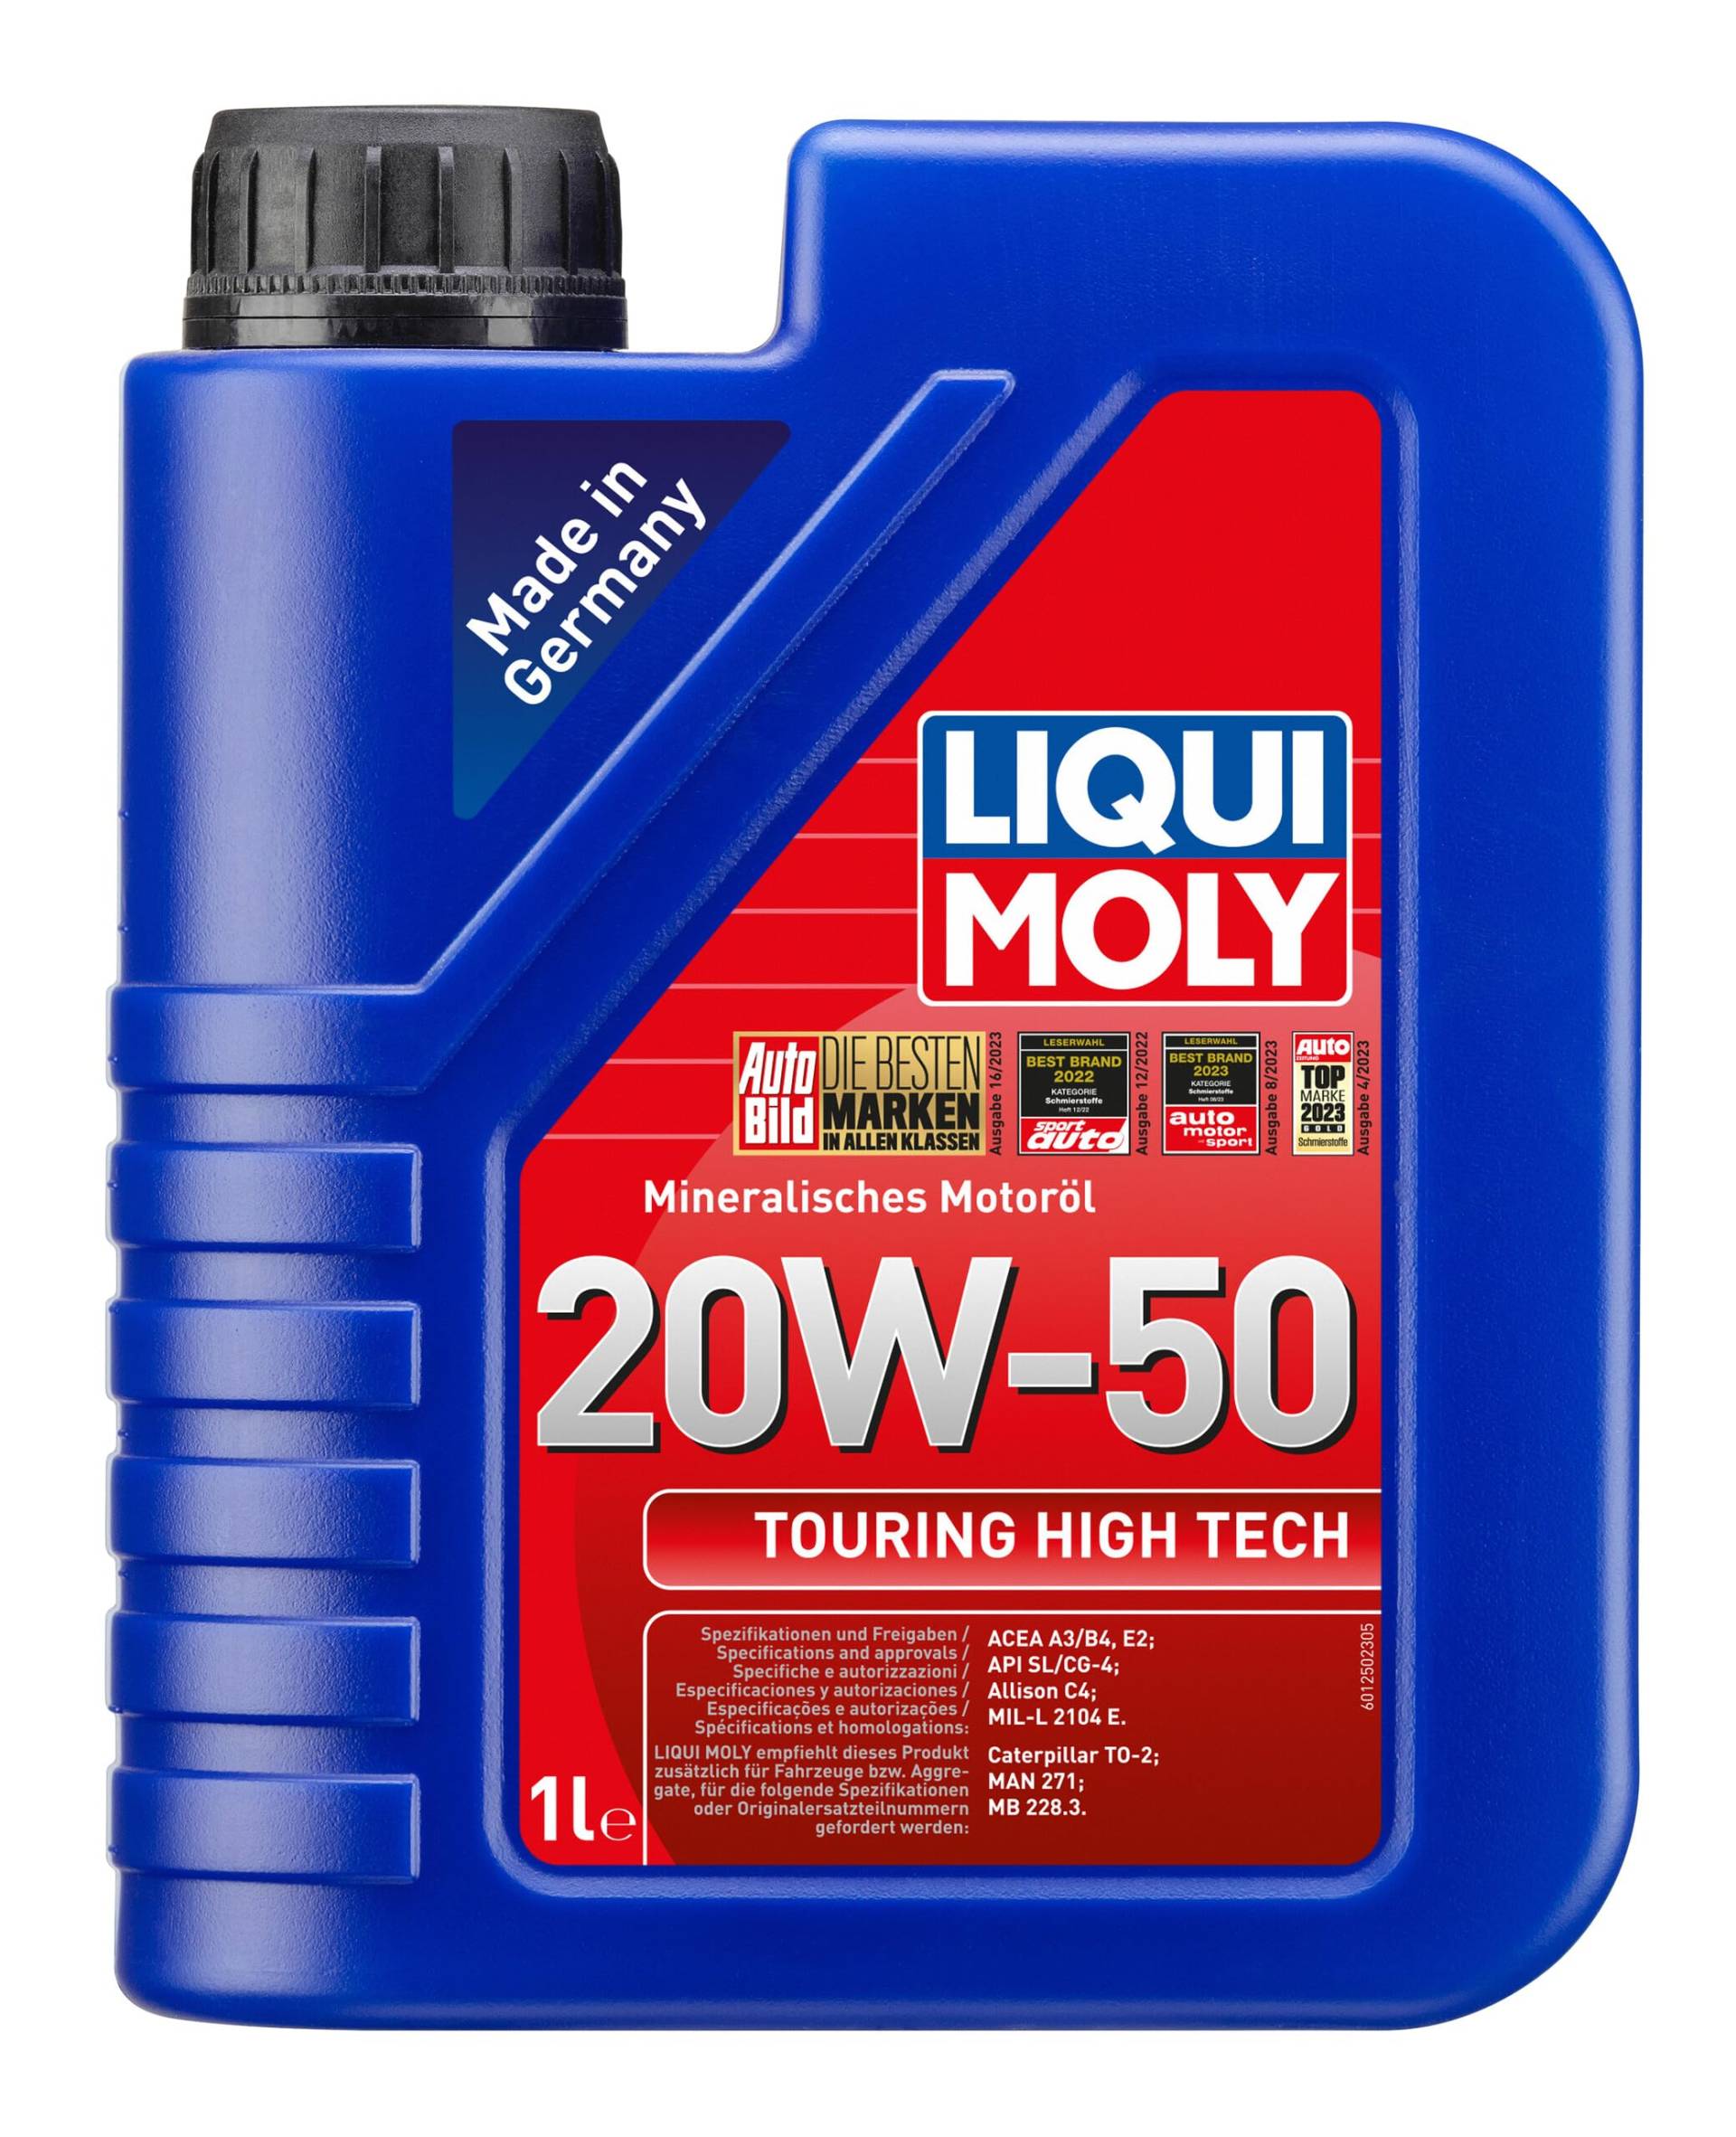 LIQUI MOLY Touring High Tech 20W-50 | 1 L | mineralisches Motoröl | Art.-Nr.: 1250 von Liqui Moly